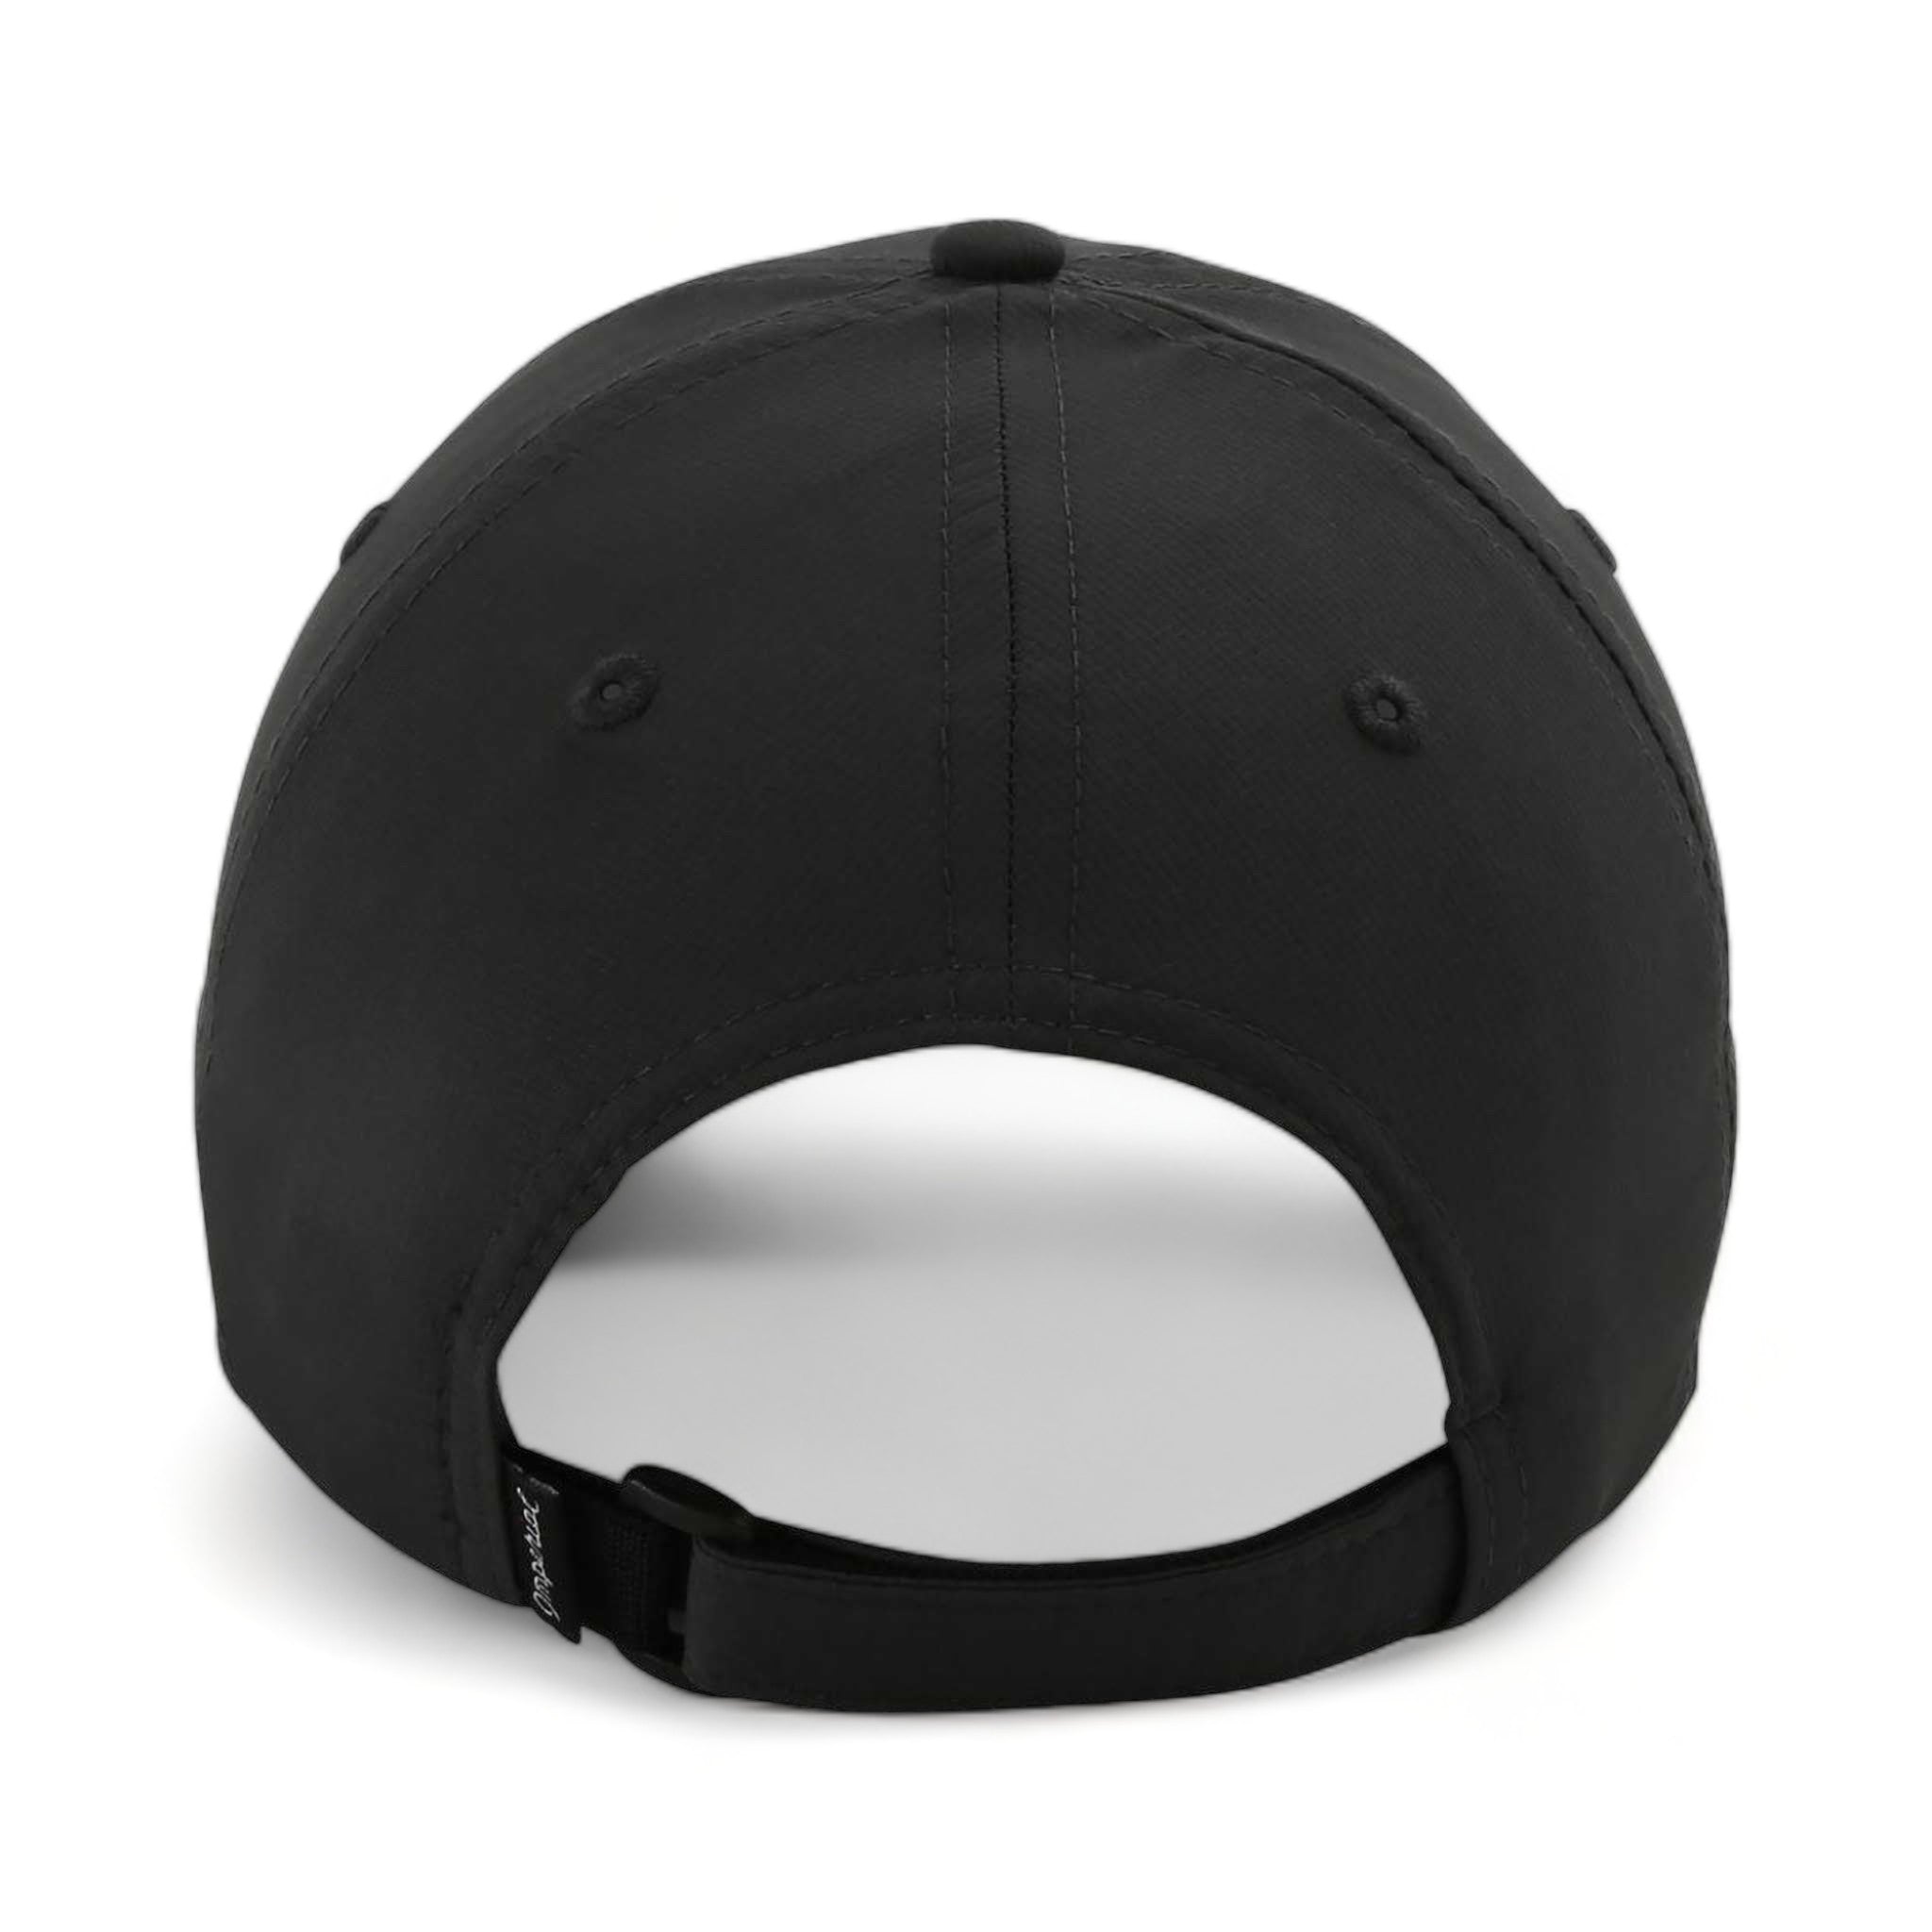 Back view of Imperial X210P custom hat in dark grey